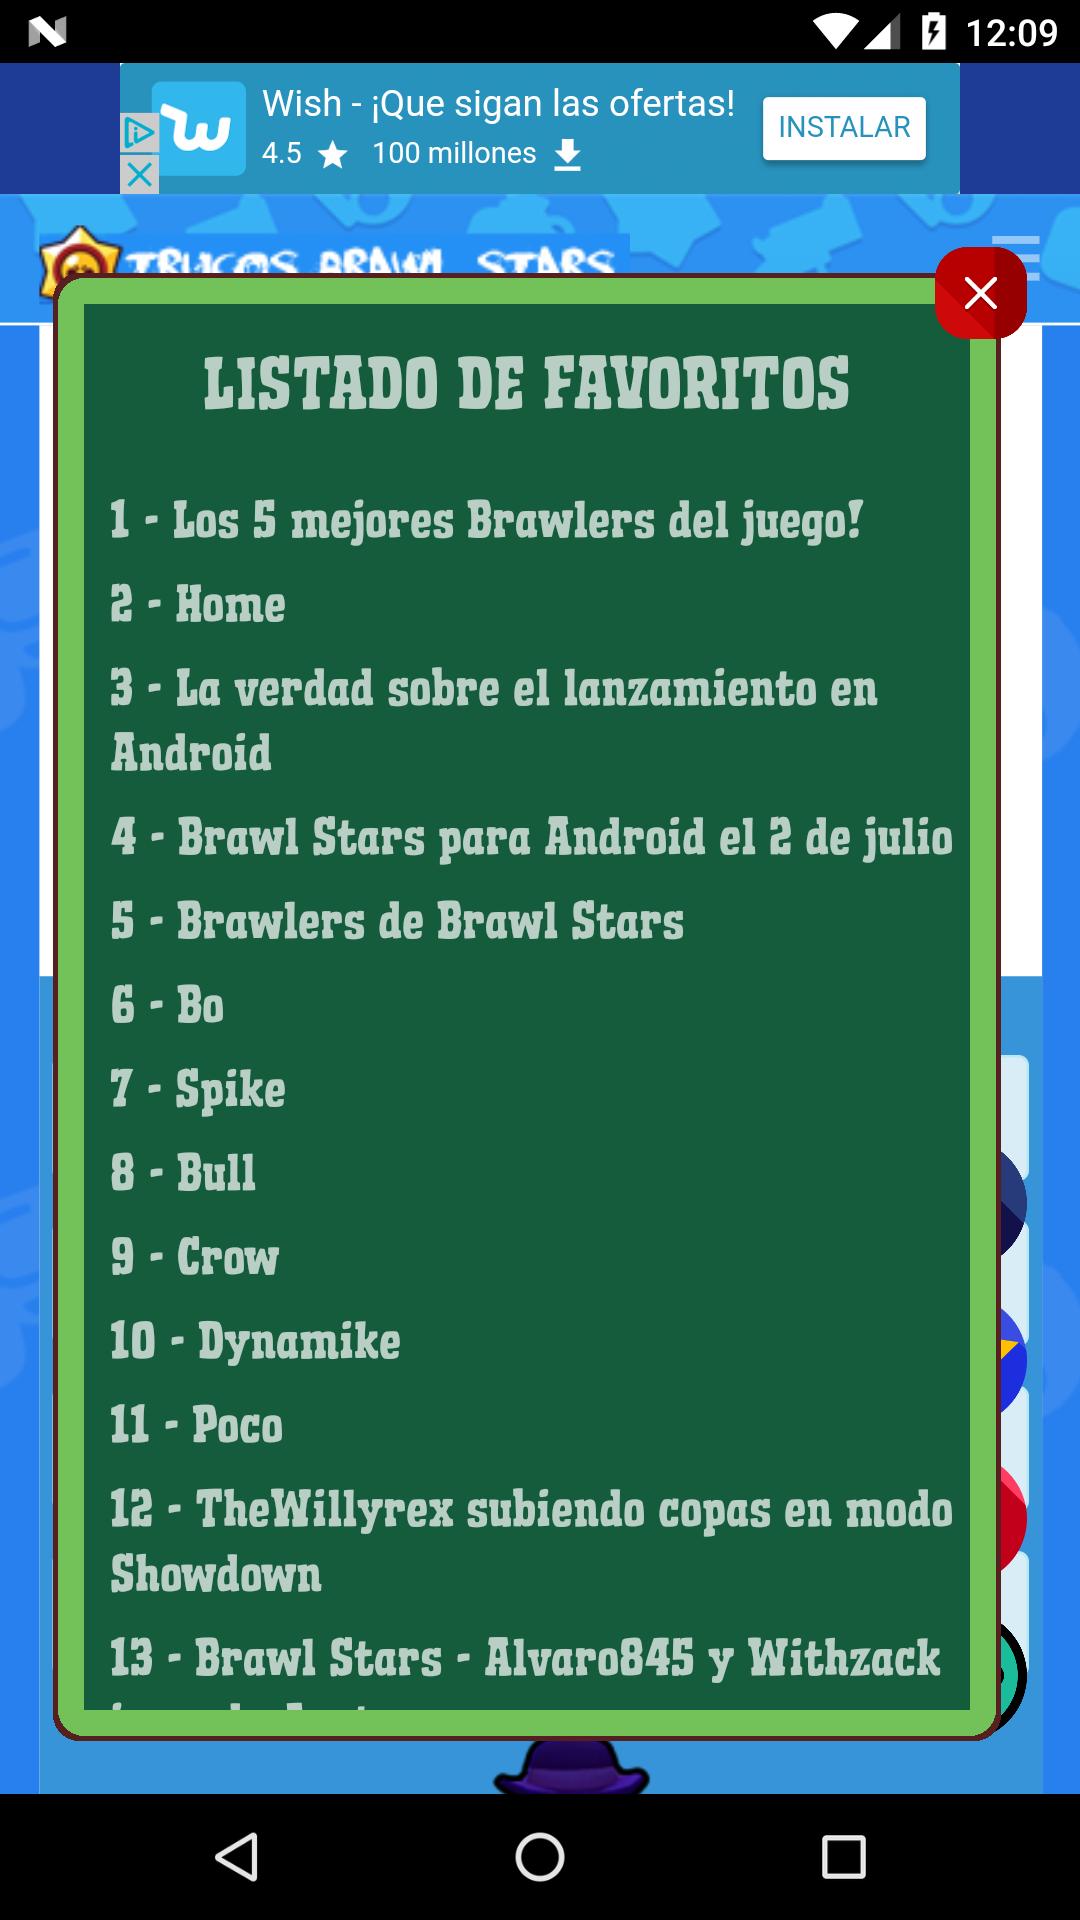 Guia Y Trucos Para Brawl Stars For Android Apk Download - brawl stars poco guia